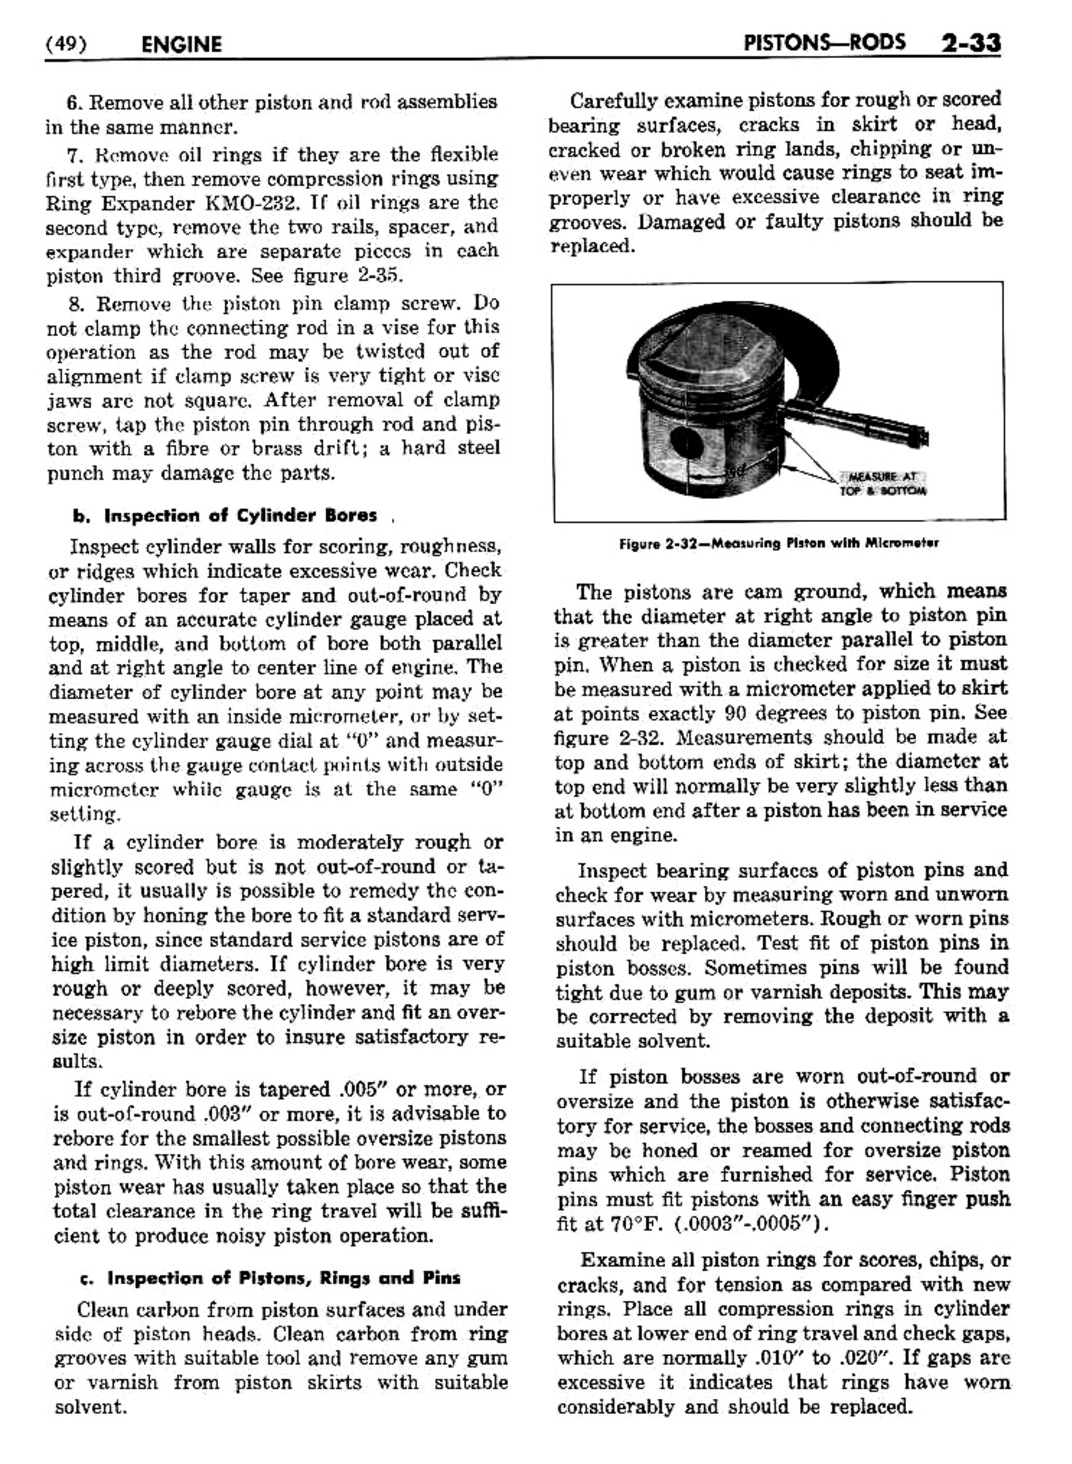 n_03 1954 Buick Shop Manual - Engine-033-033.jpg